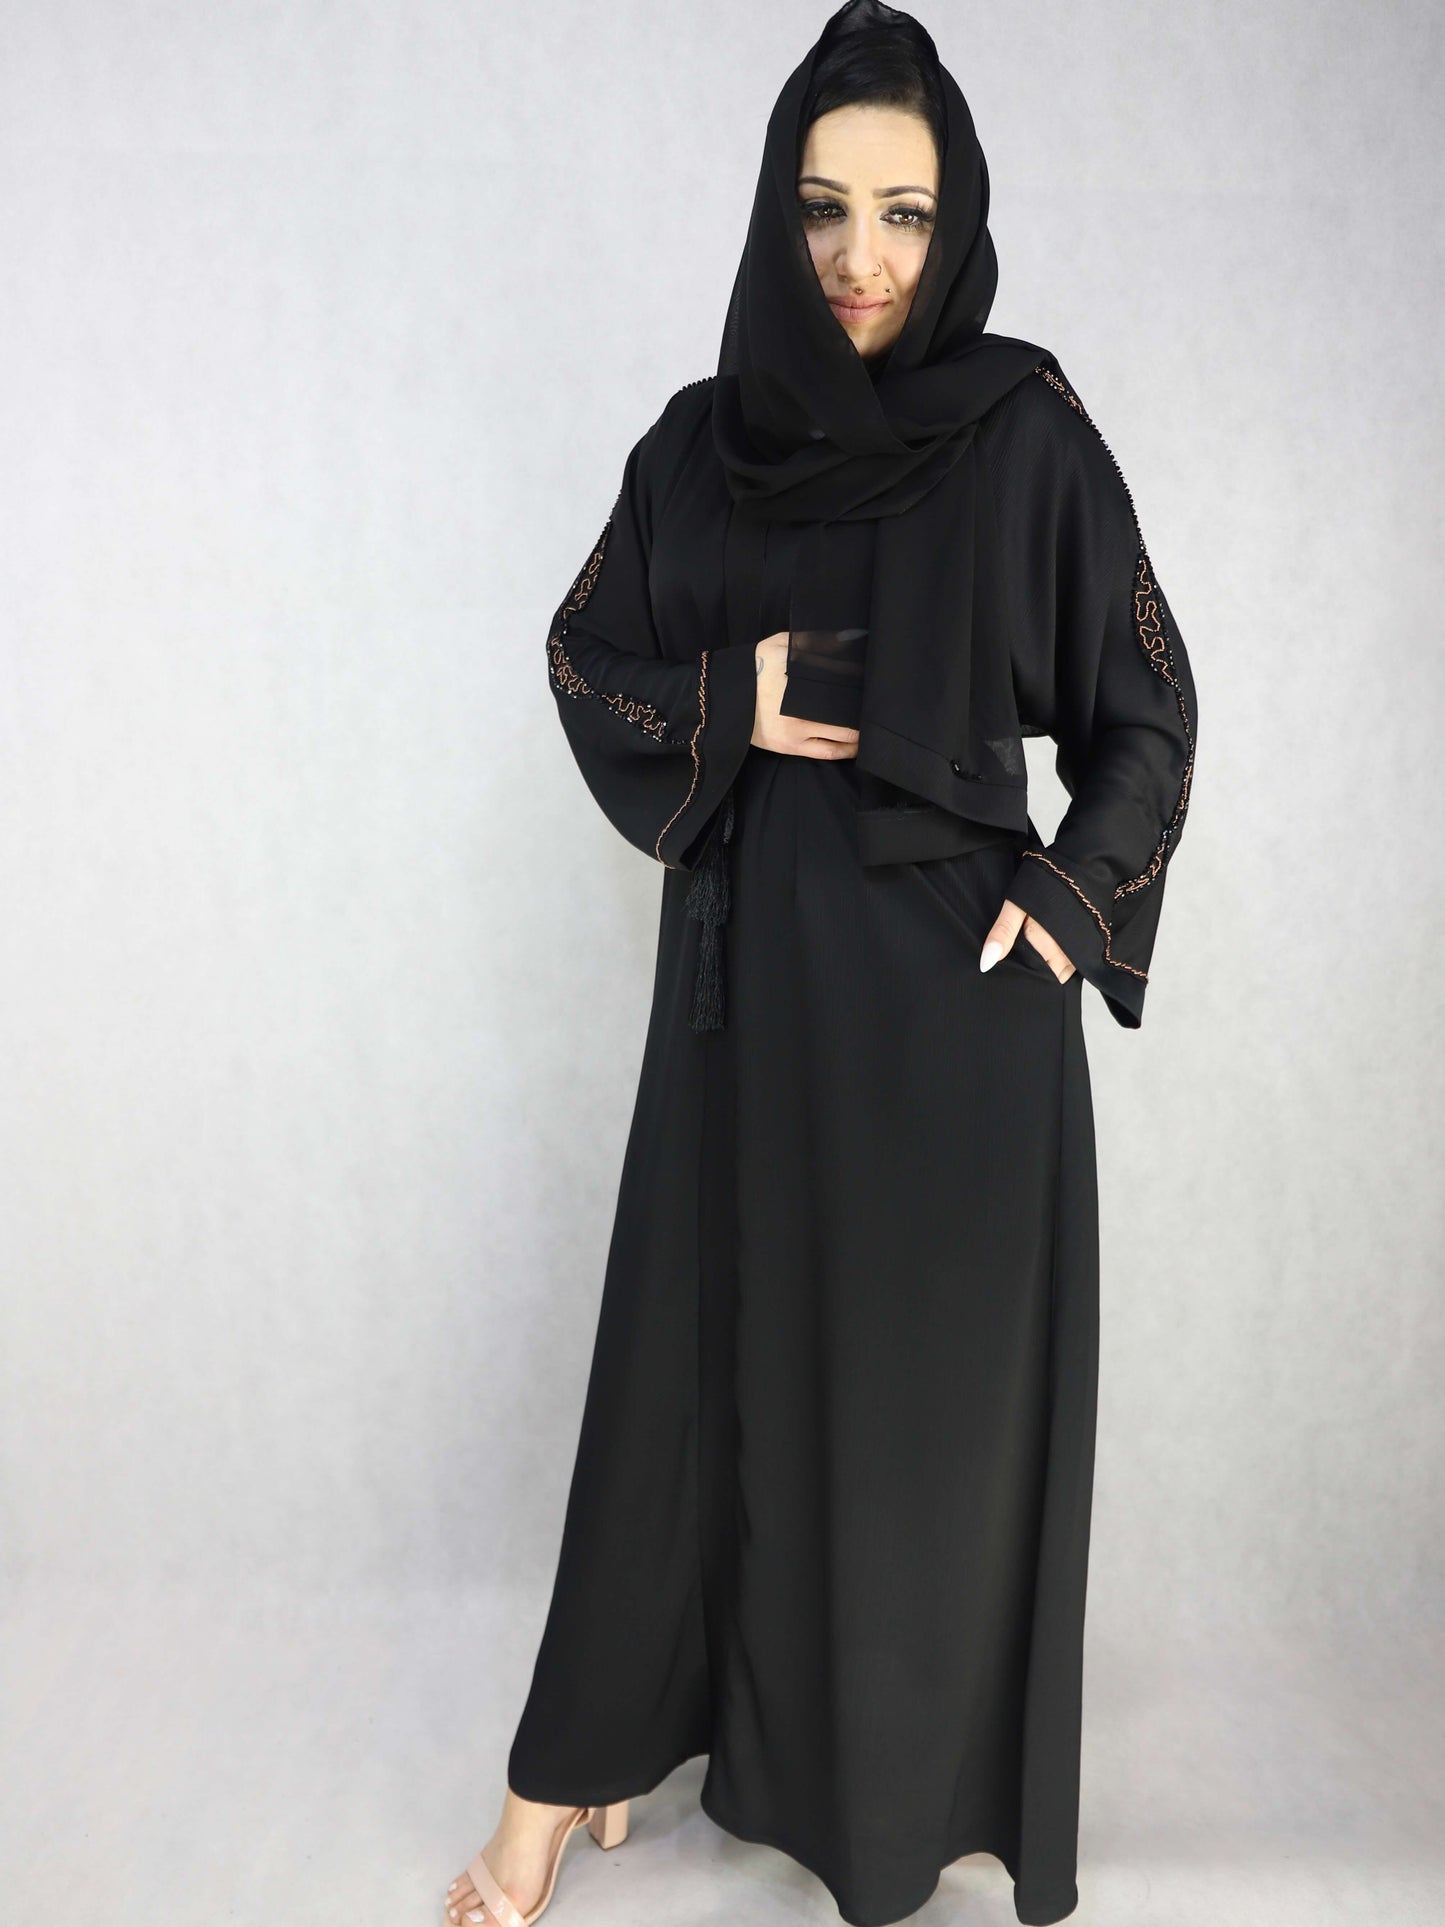 Hand Stone Work Black Color Abaya Modest Dresses For Women.